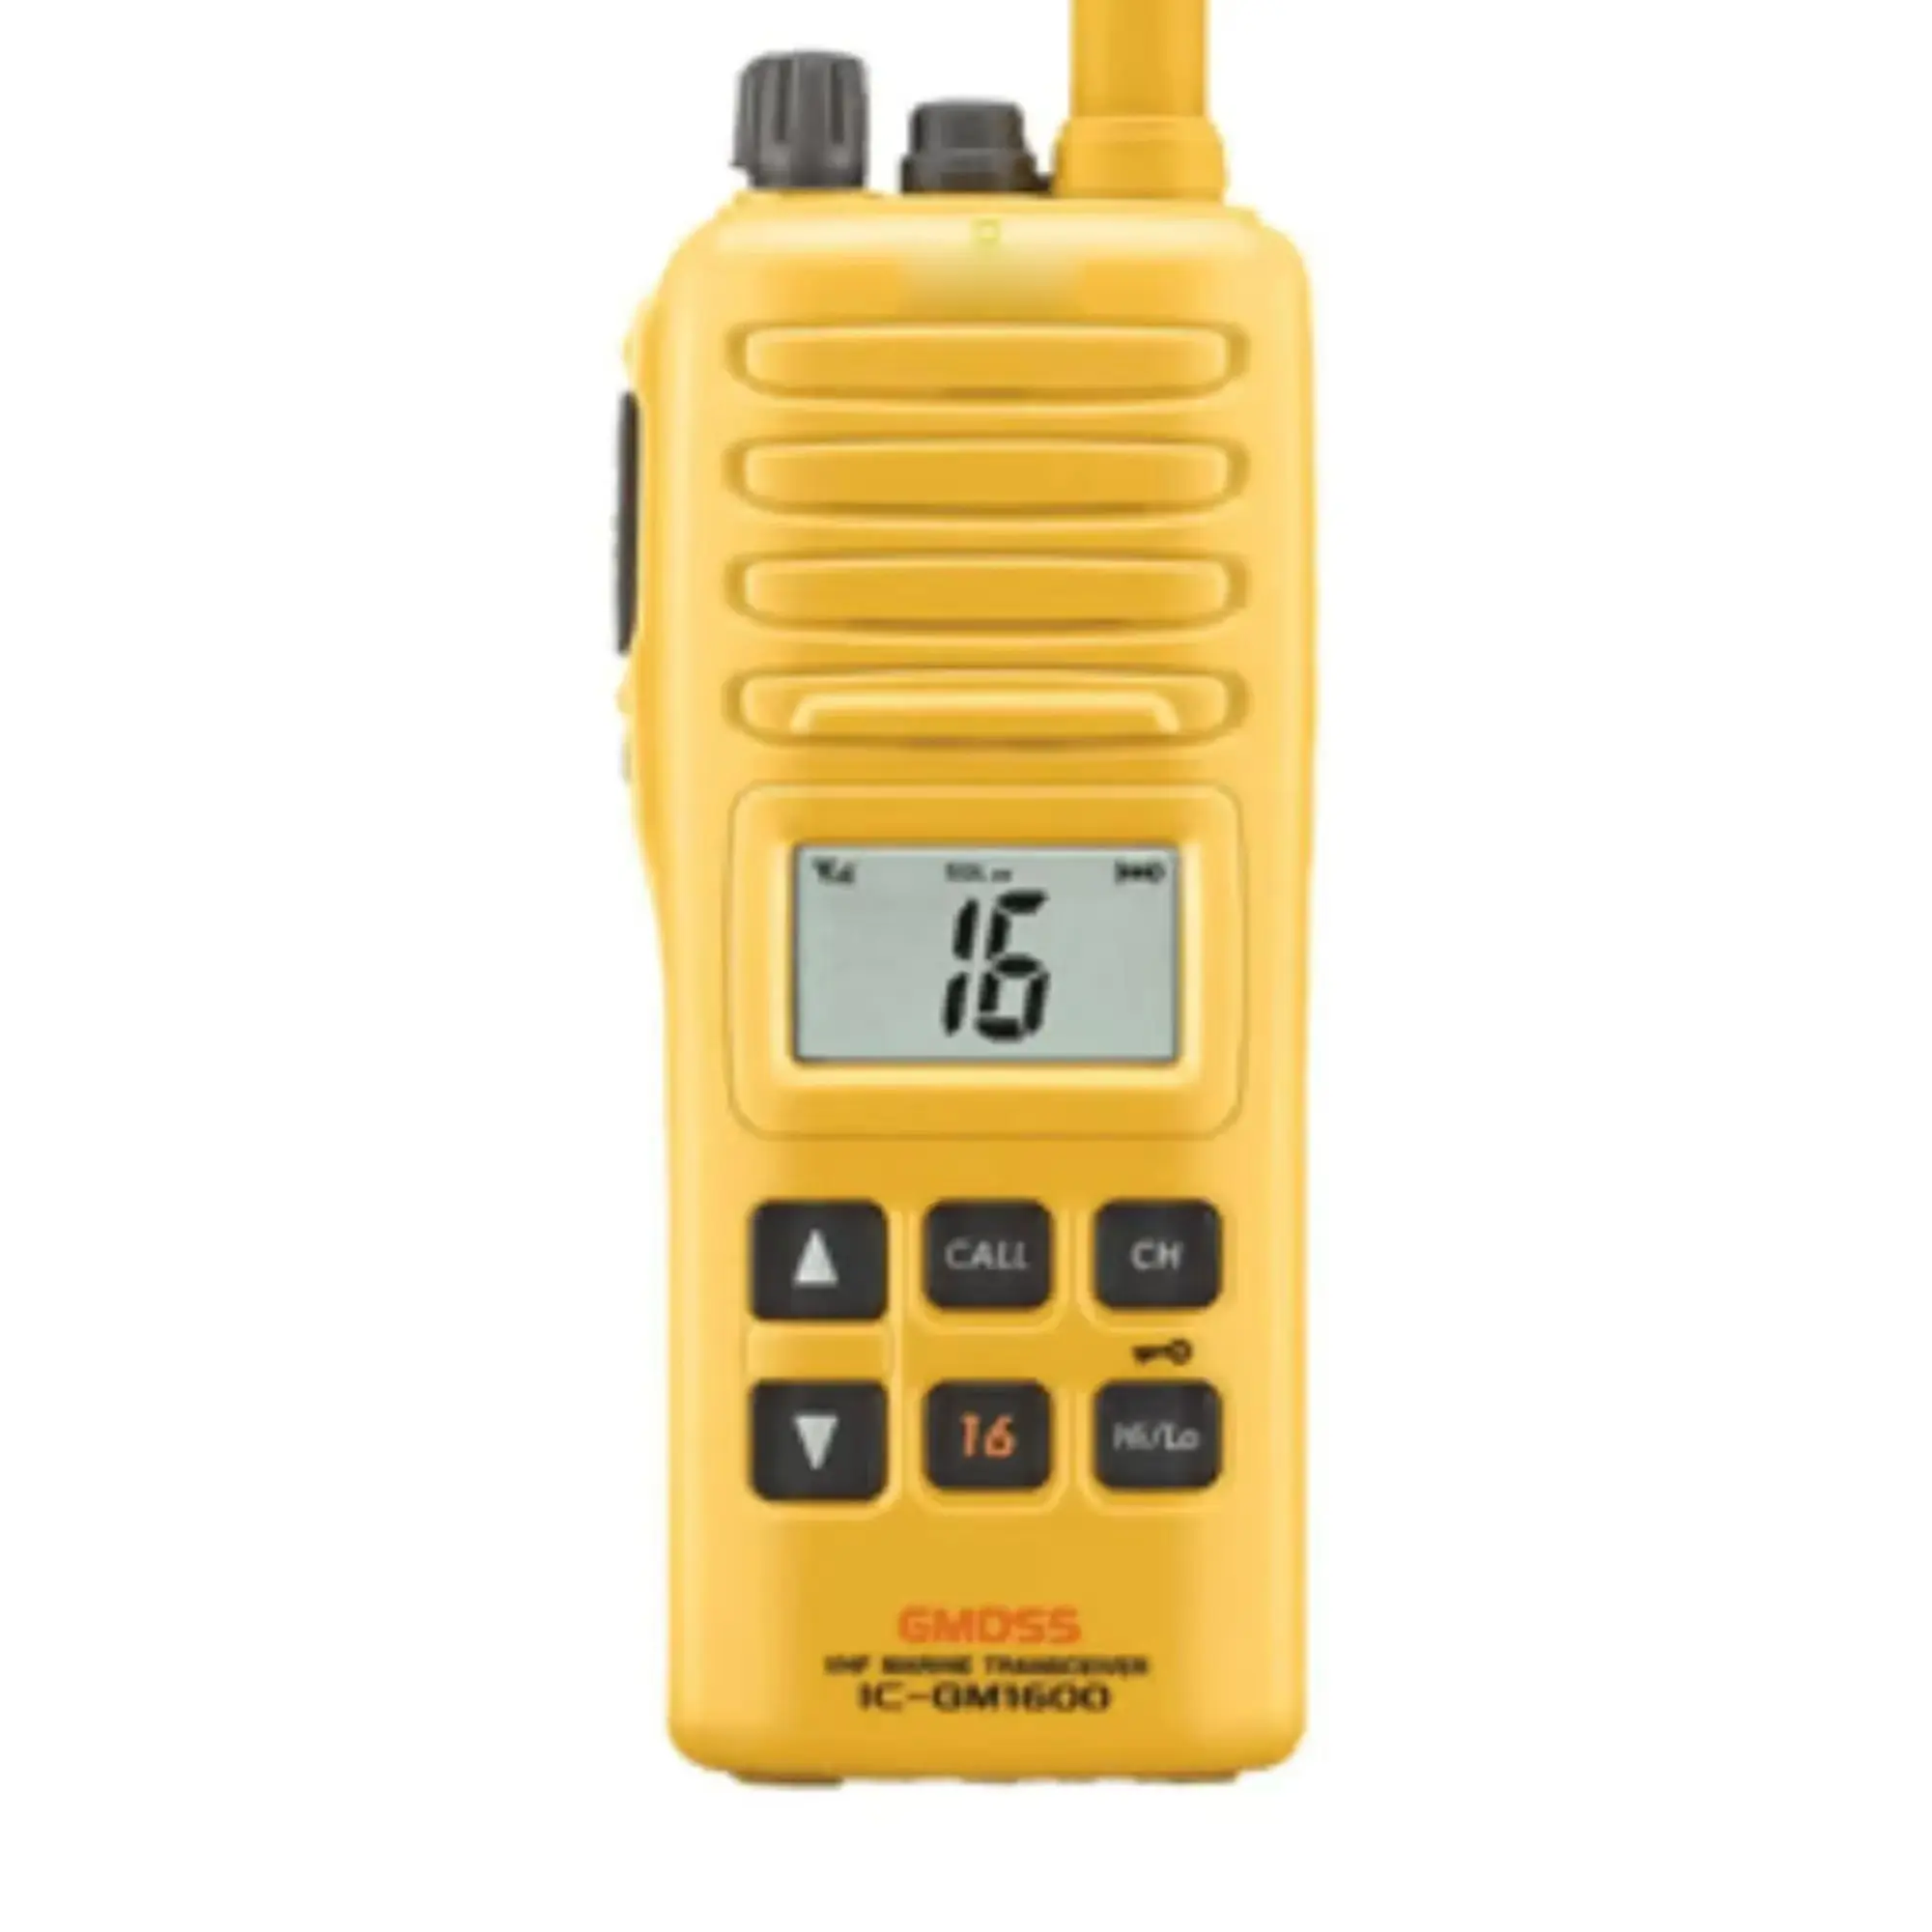 Foricom อุปกรณ์ IC-GM1600E แบบใช้มือถือ VHF วิทยุแบบสองทาง gmdss แบบพกพาสำหรับการเอาชีวิตรอดงานฝีมือความปลอดภัยสาธารณะขนาดกะทัดรัดและมีประสิทธิภาพ